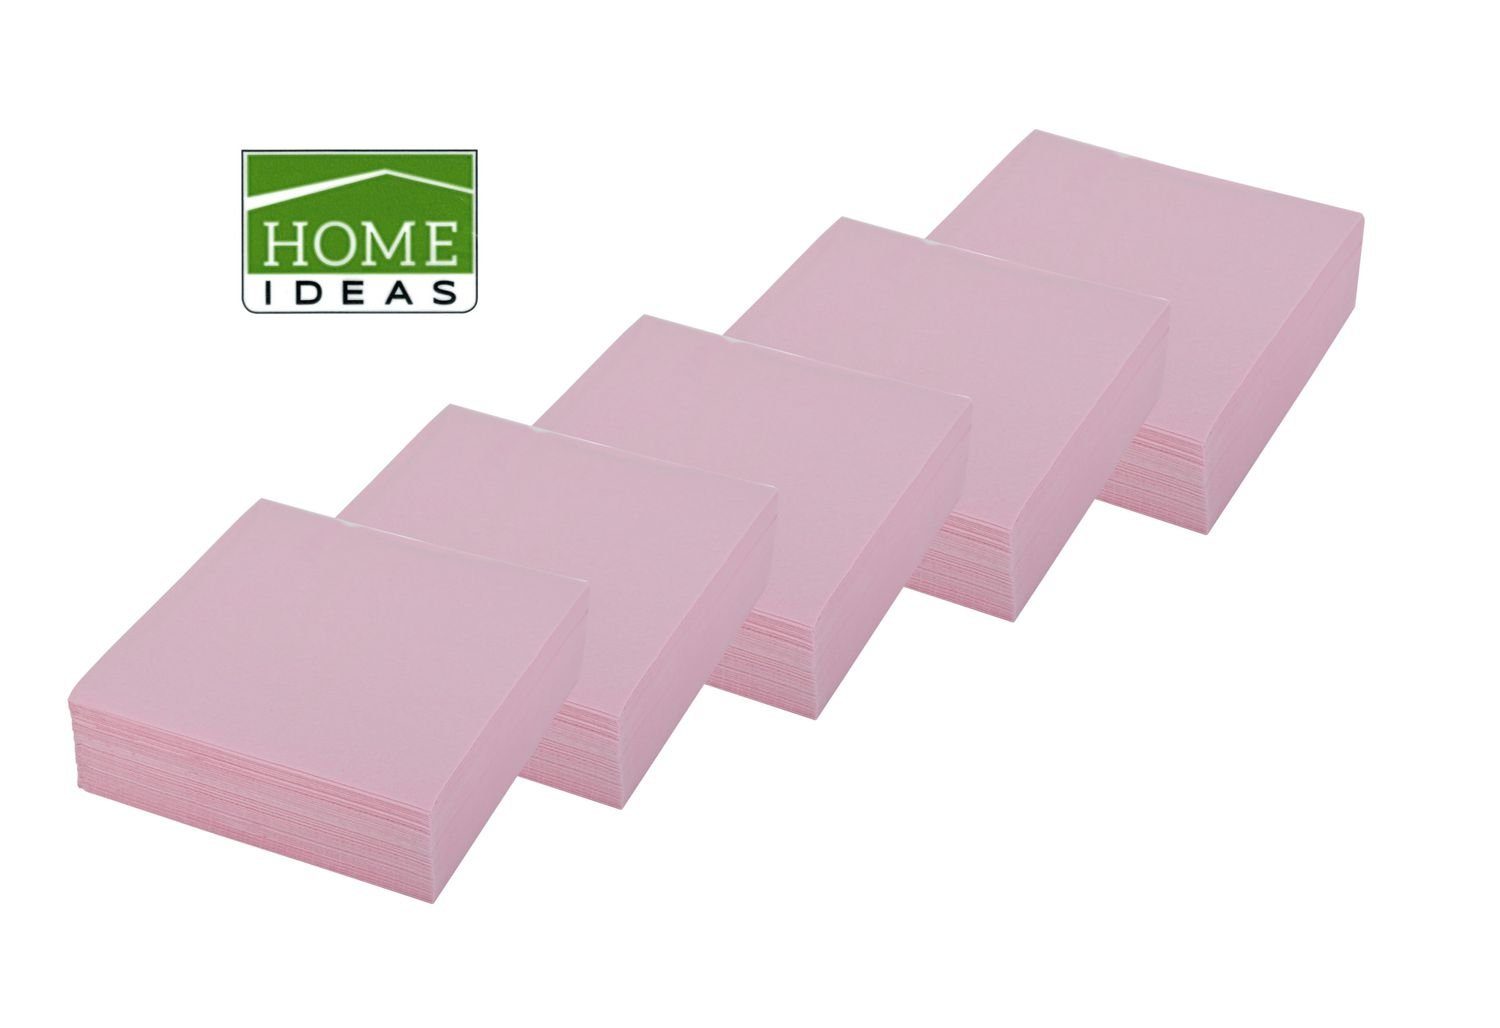 Home Ideas Papierserviette 250 Servietten rosa 33x33cm 3lagig 1/4 Falz Papierserviette Tischdeko